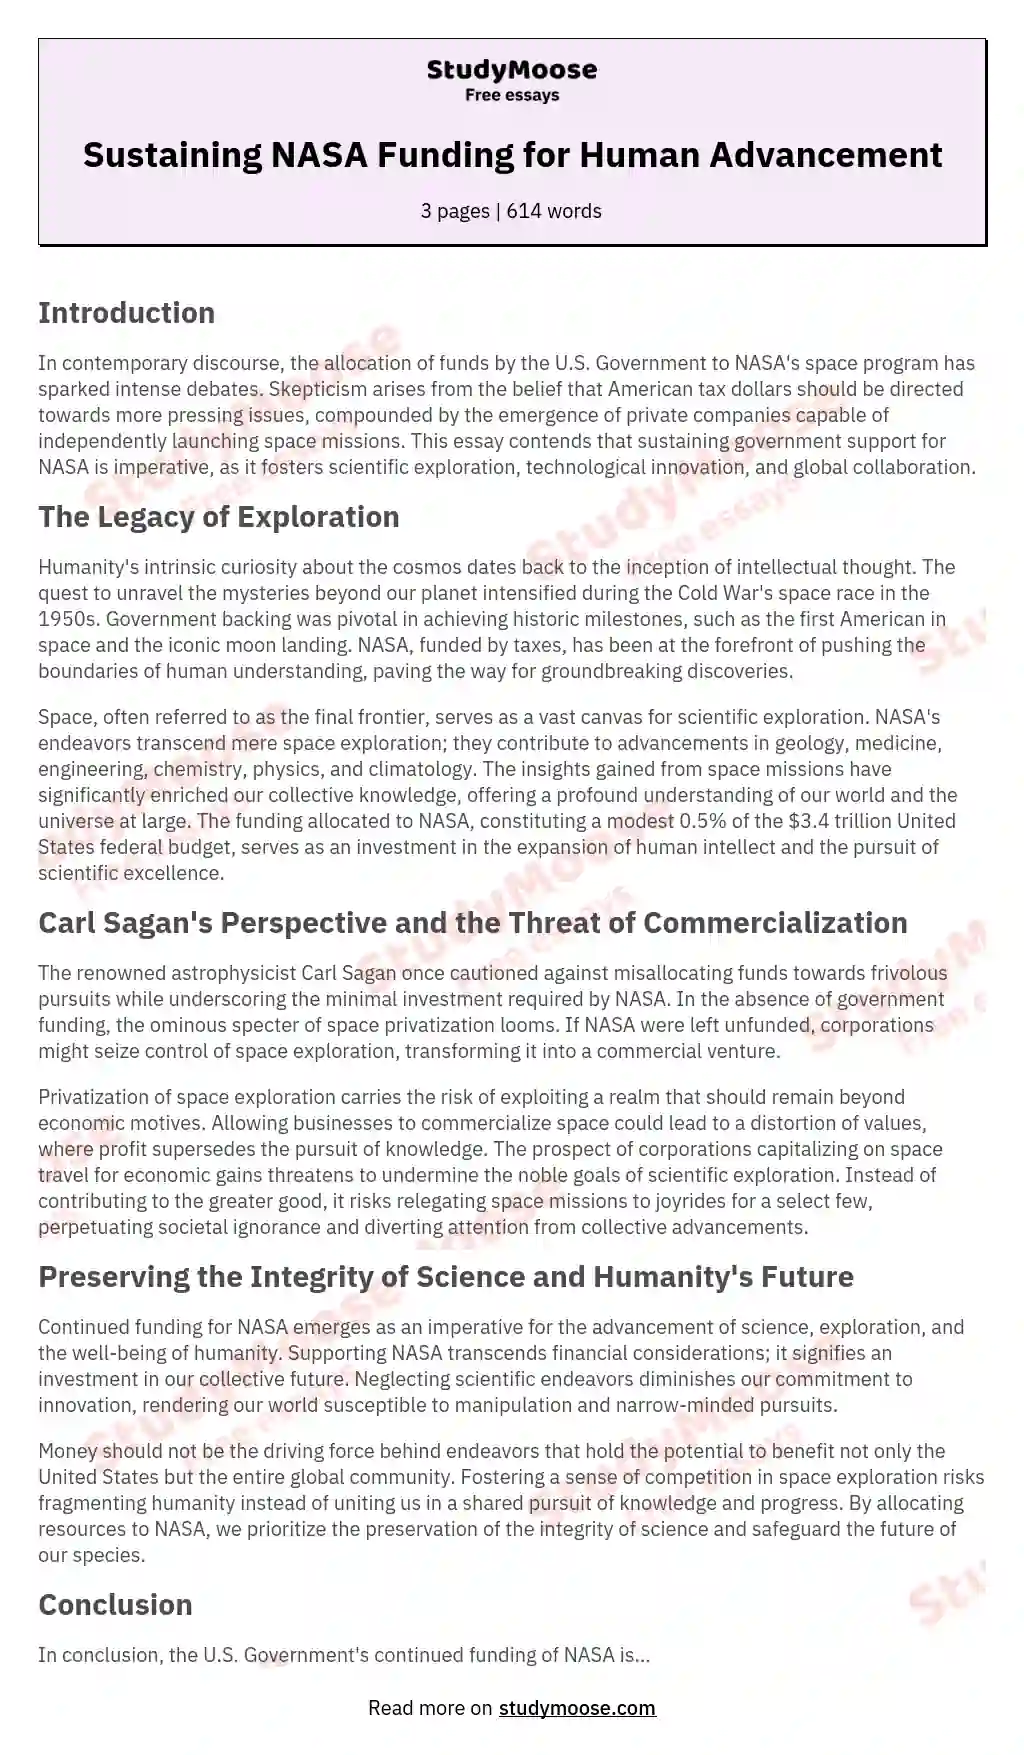 Sustaining NASA Funding for Human Advancement essay